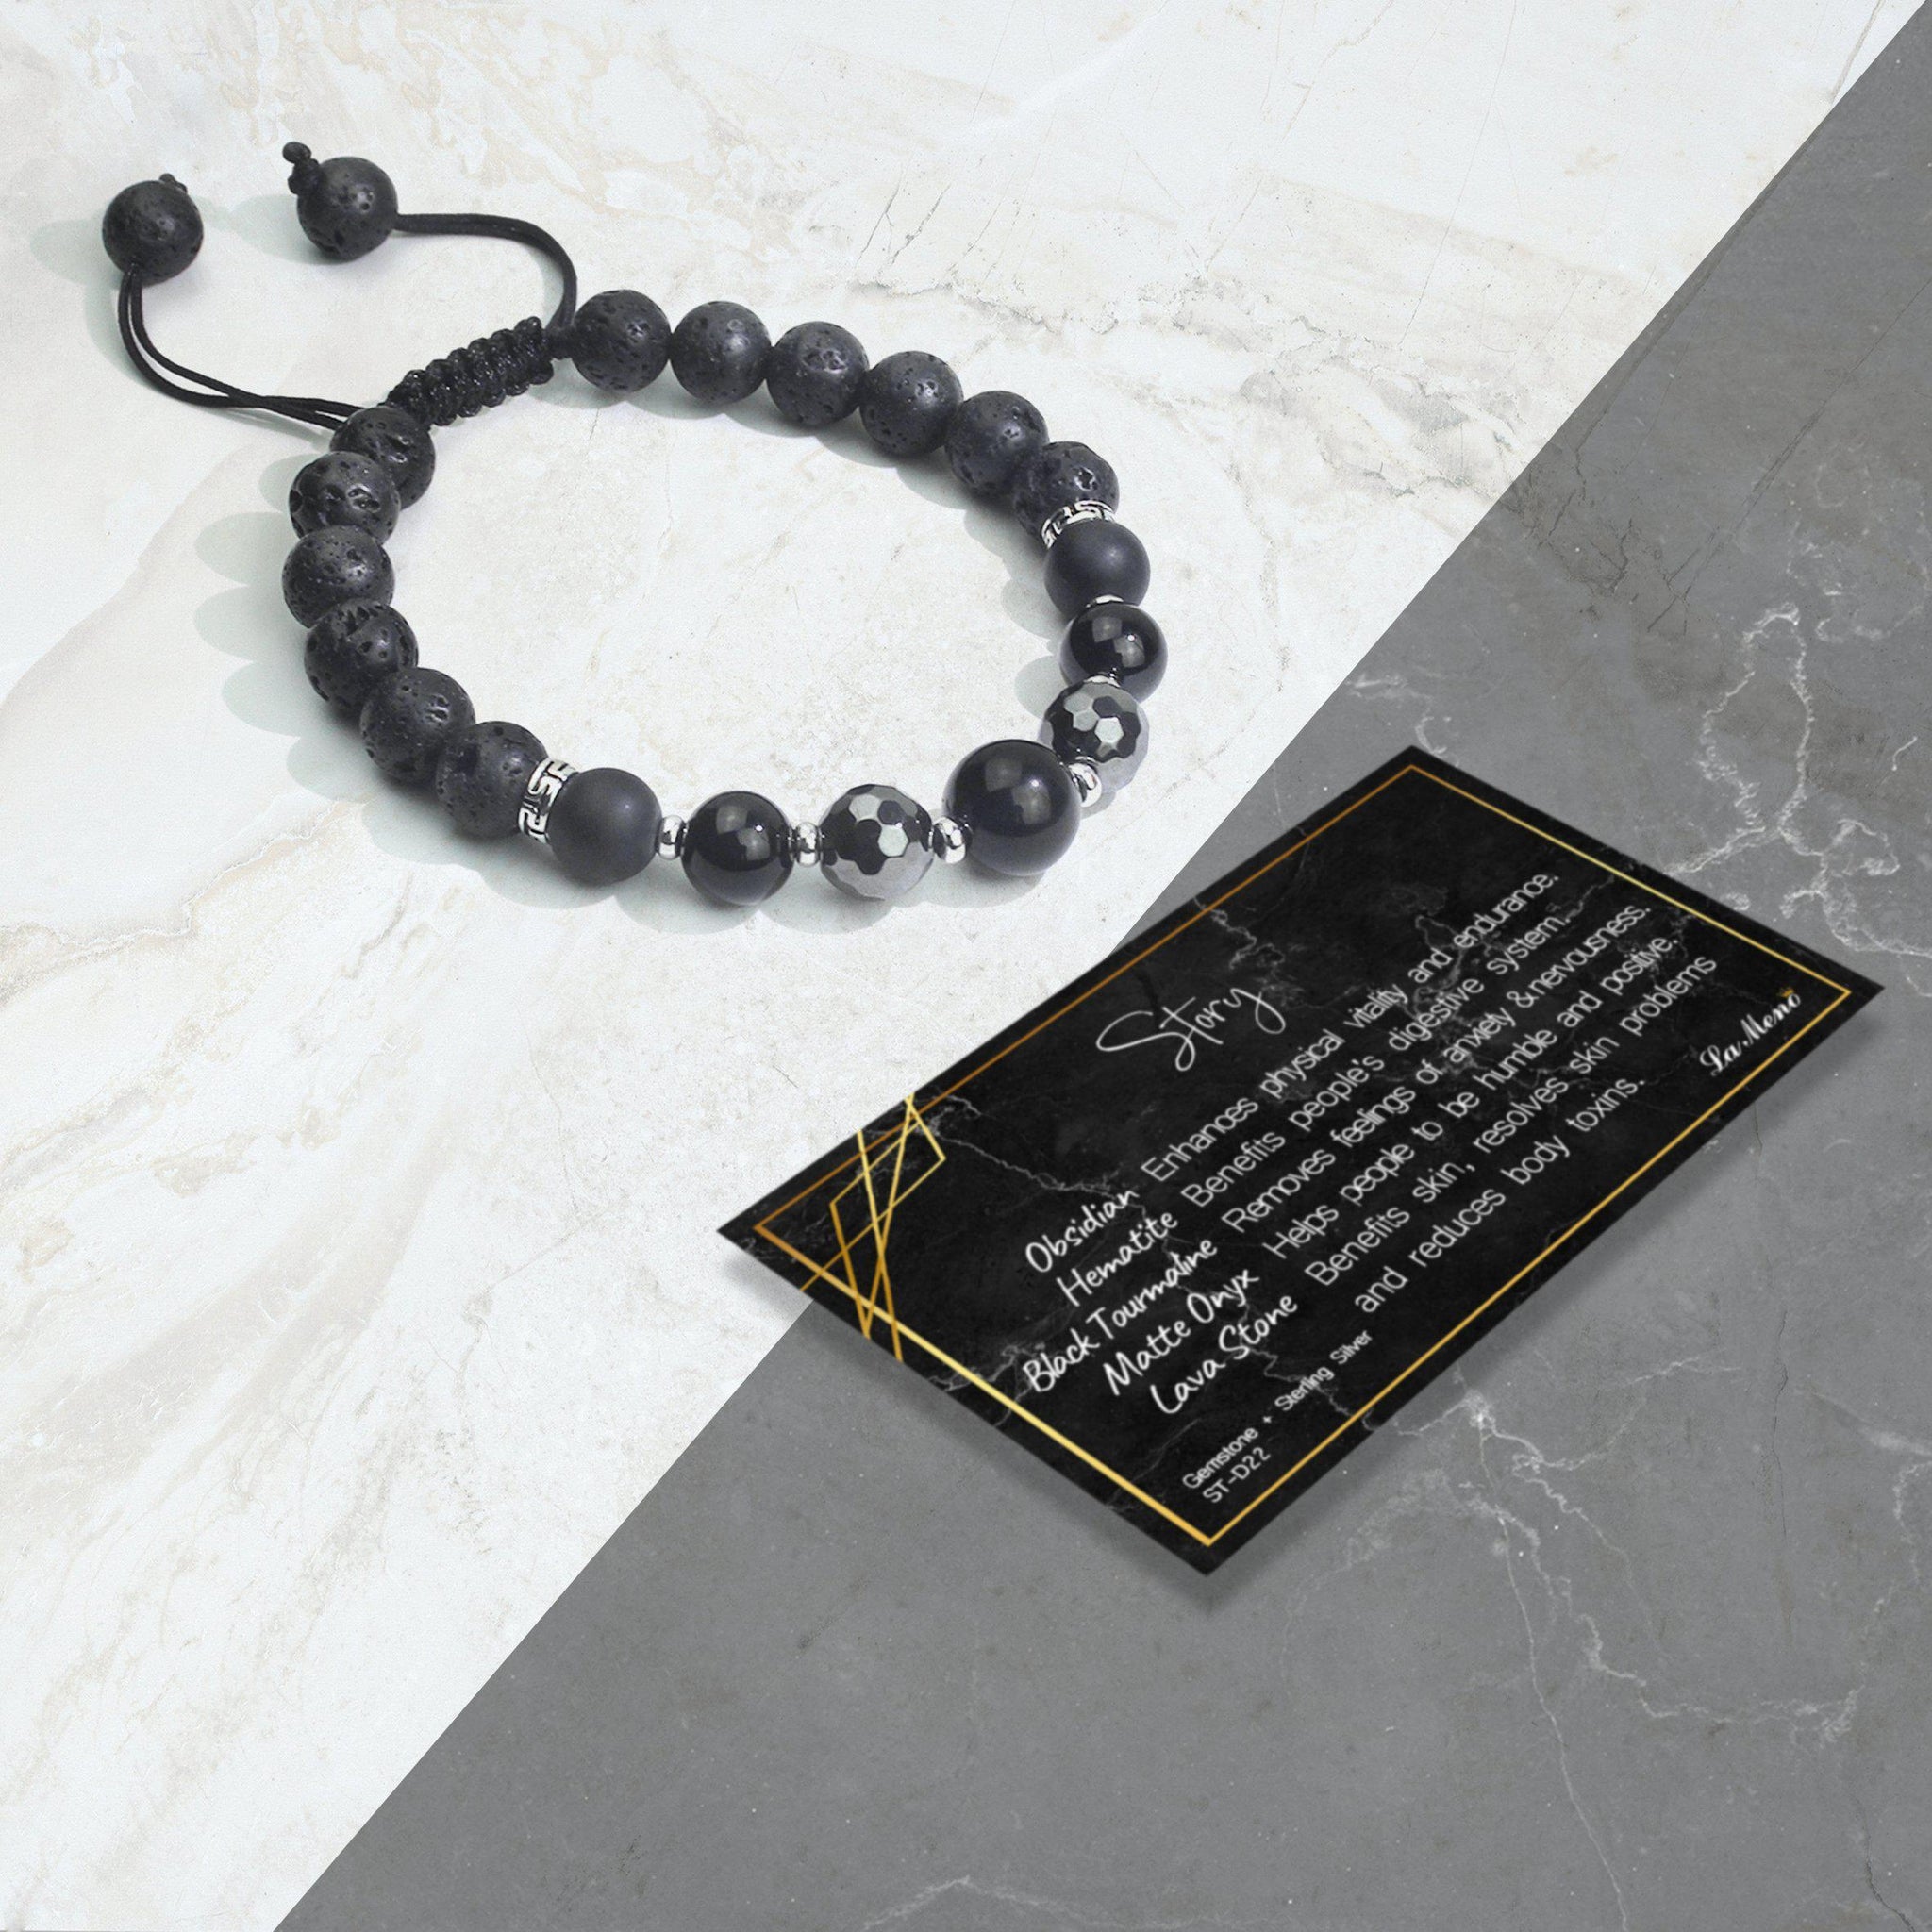 Buy Black Agate Stone Bracelet - 100% Original Guaranteed